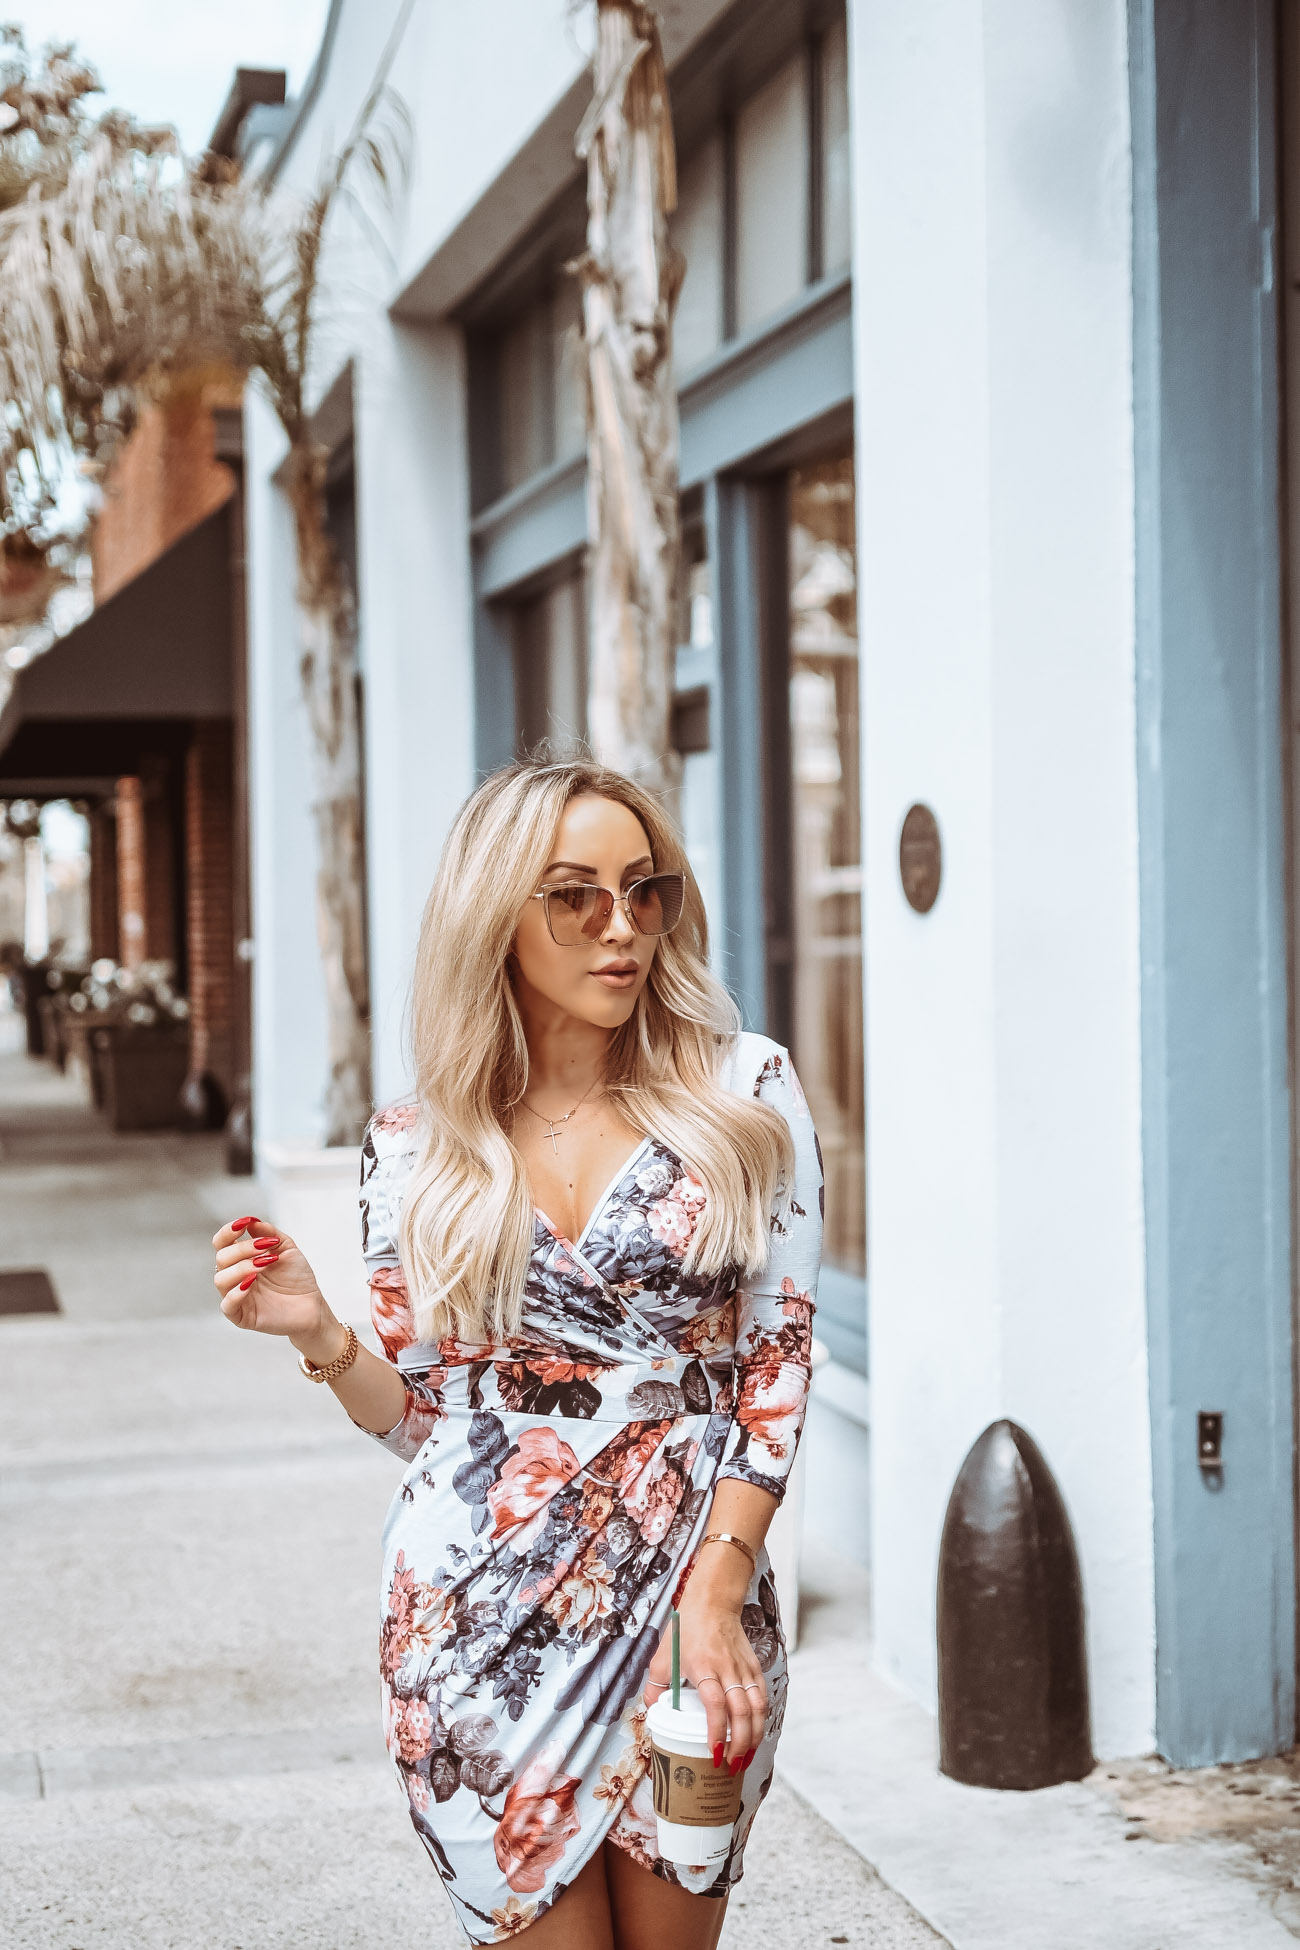 Spring Attire | Floral Dress | Blondie in the City by Hayley Larue 